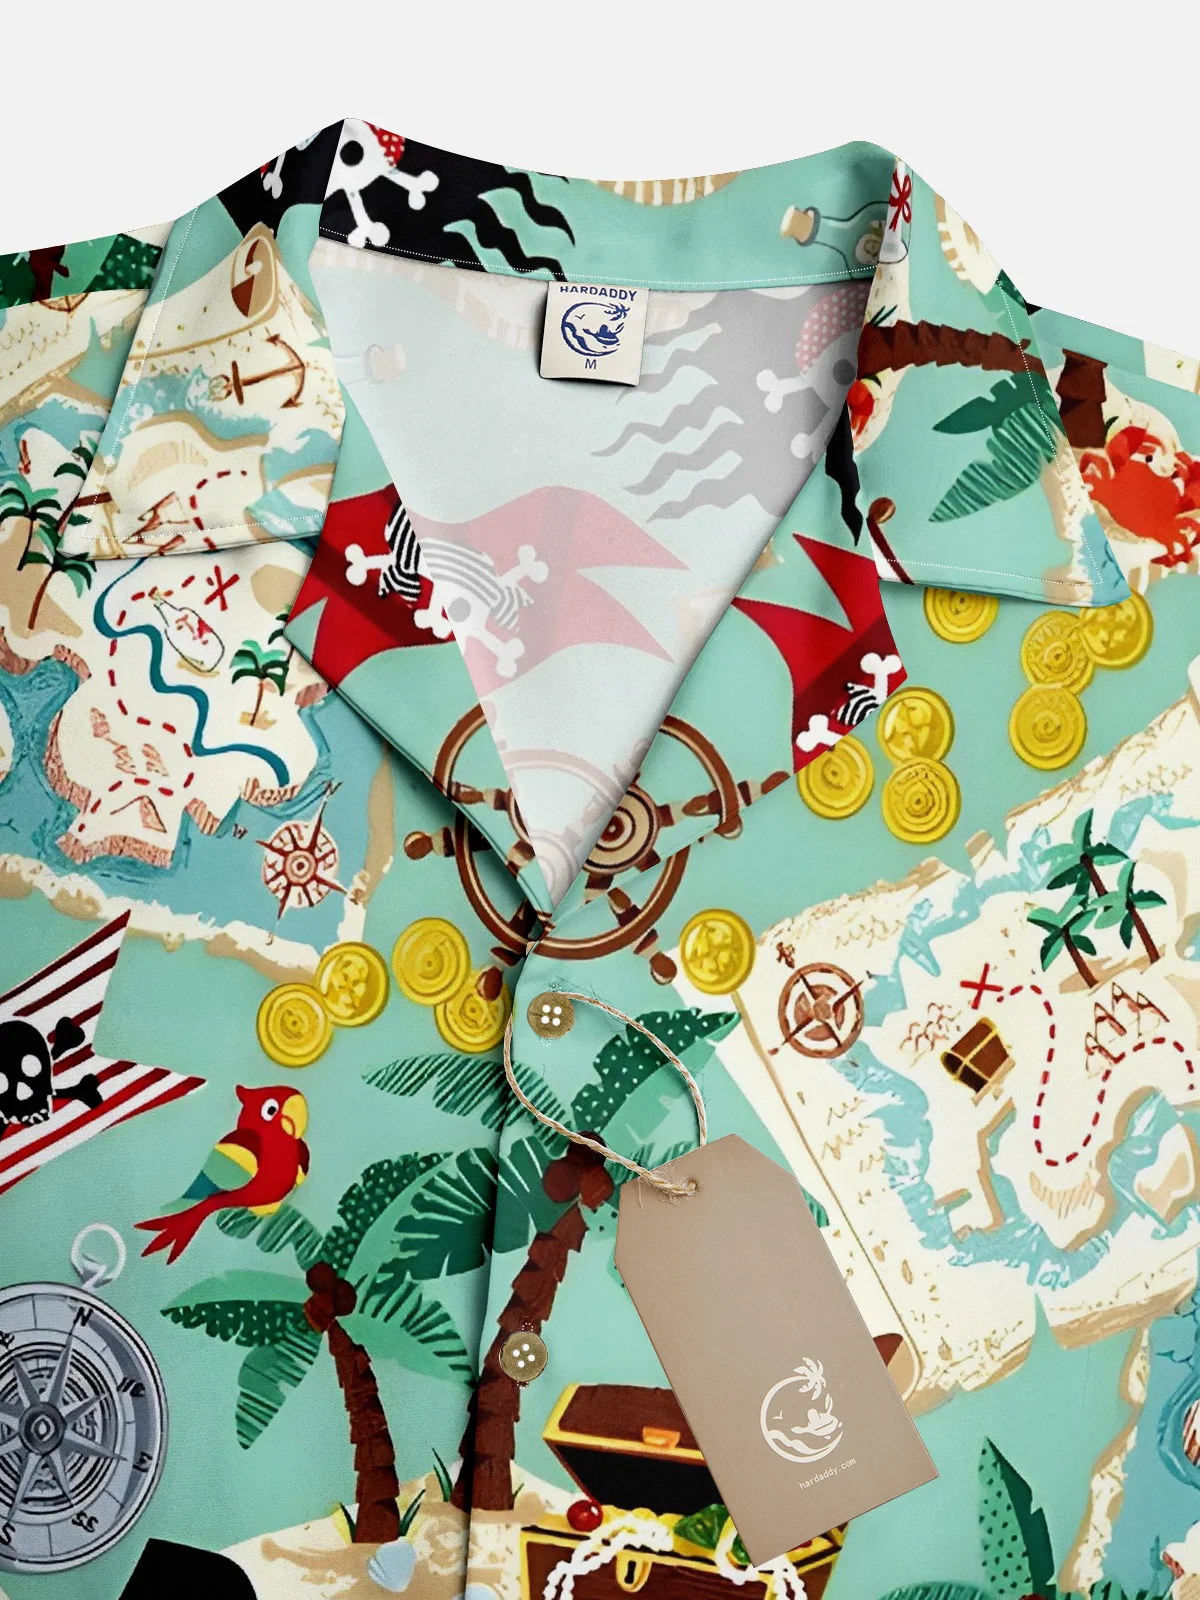 Moisture-wicking Pirate Map Coconut Tree Chest Pocket Hawaiian Shirt